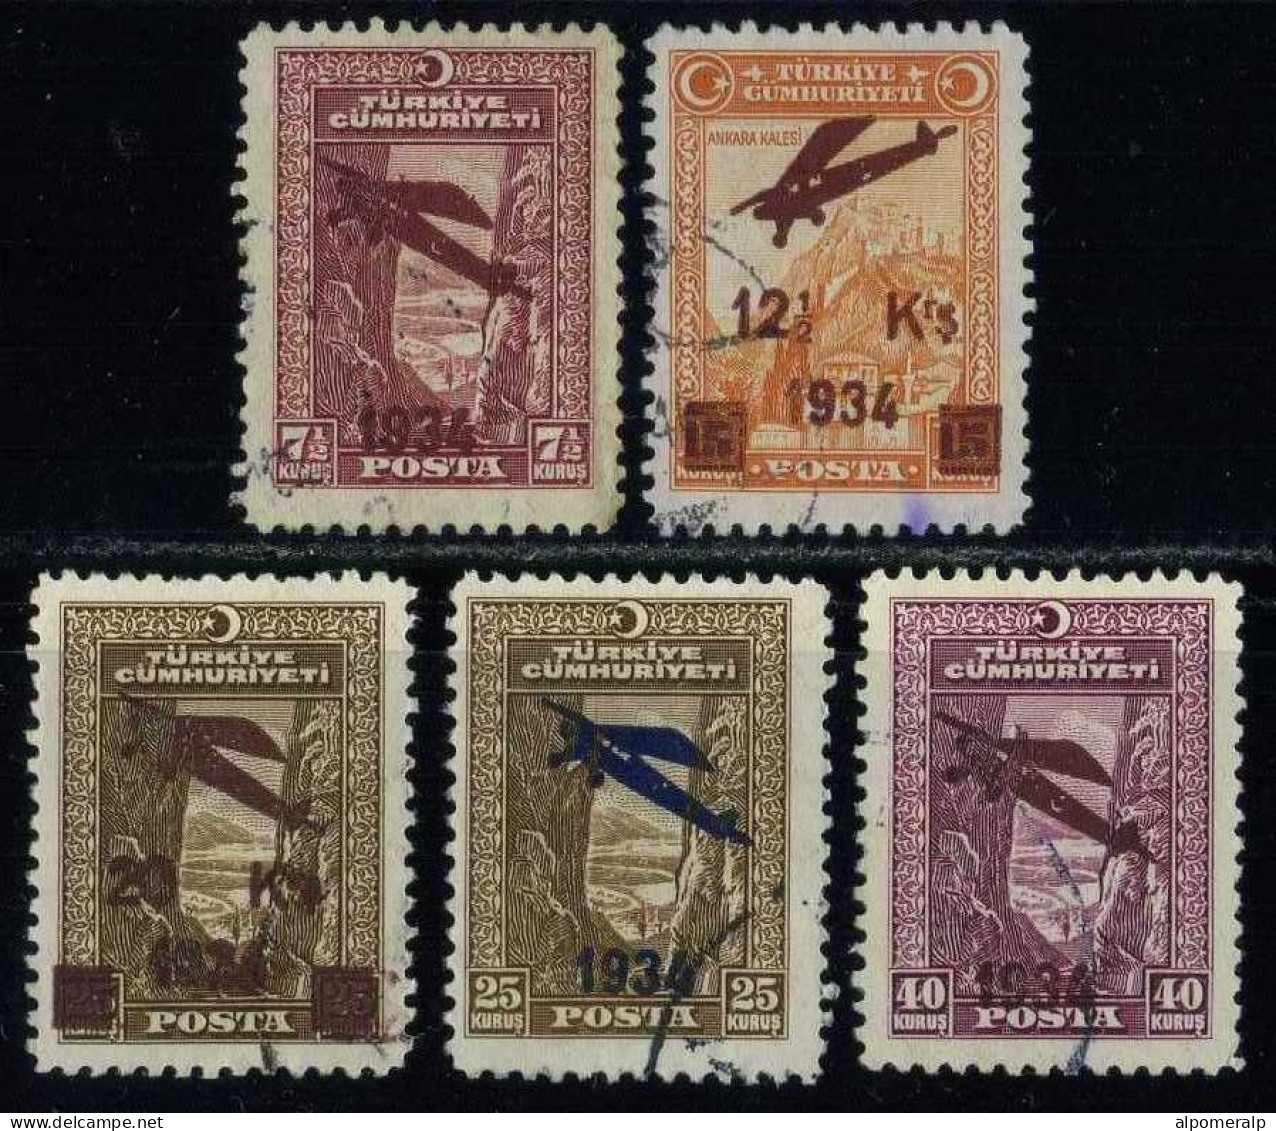 Türkiye 1934 Mi 980-984 Airmail Stamps First Issue, Opening Of The Ankara-Istanbul Airmail Line - Gebruikt